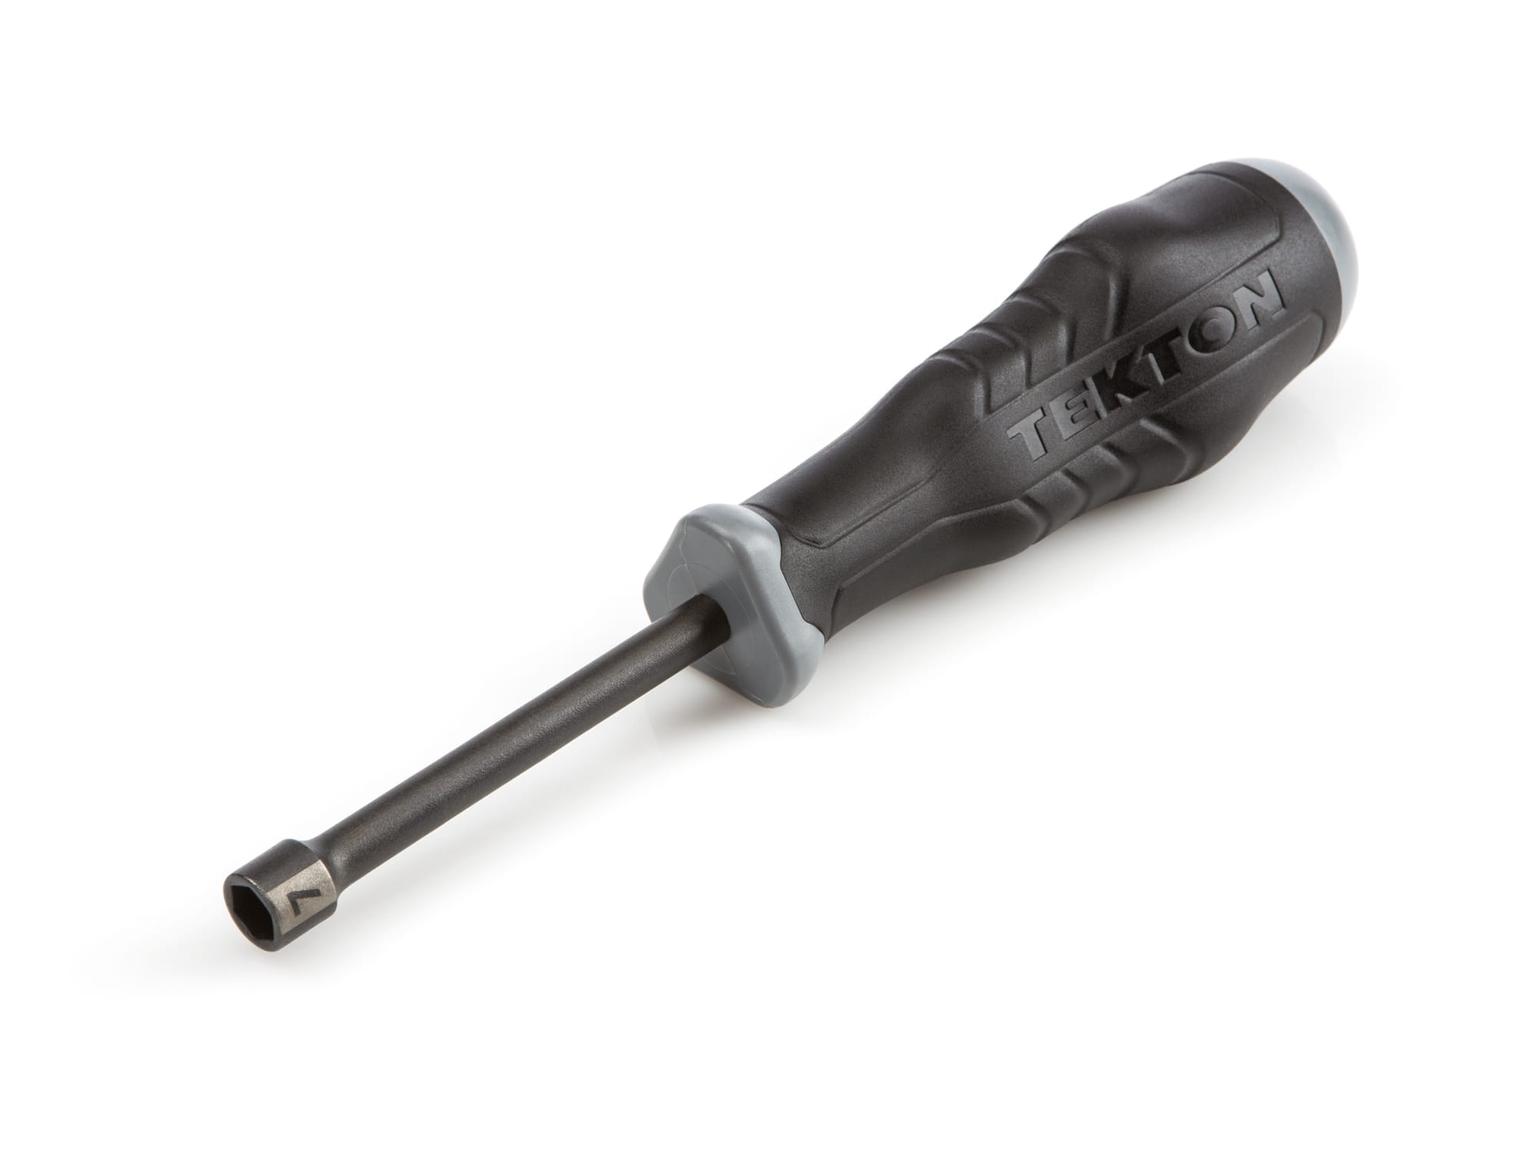 TEKTON 26885-T 7 mm High-Torque Black Oxide Blade Nut Driver